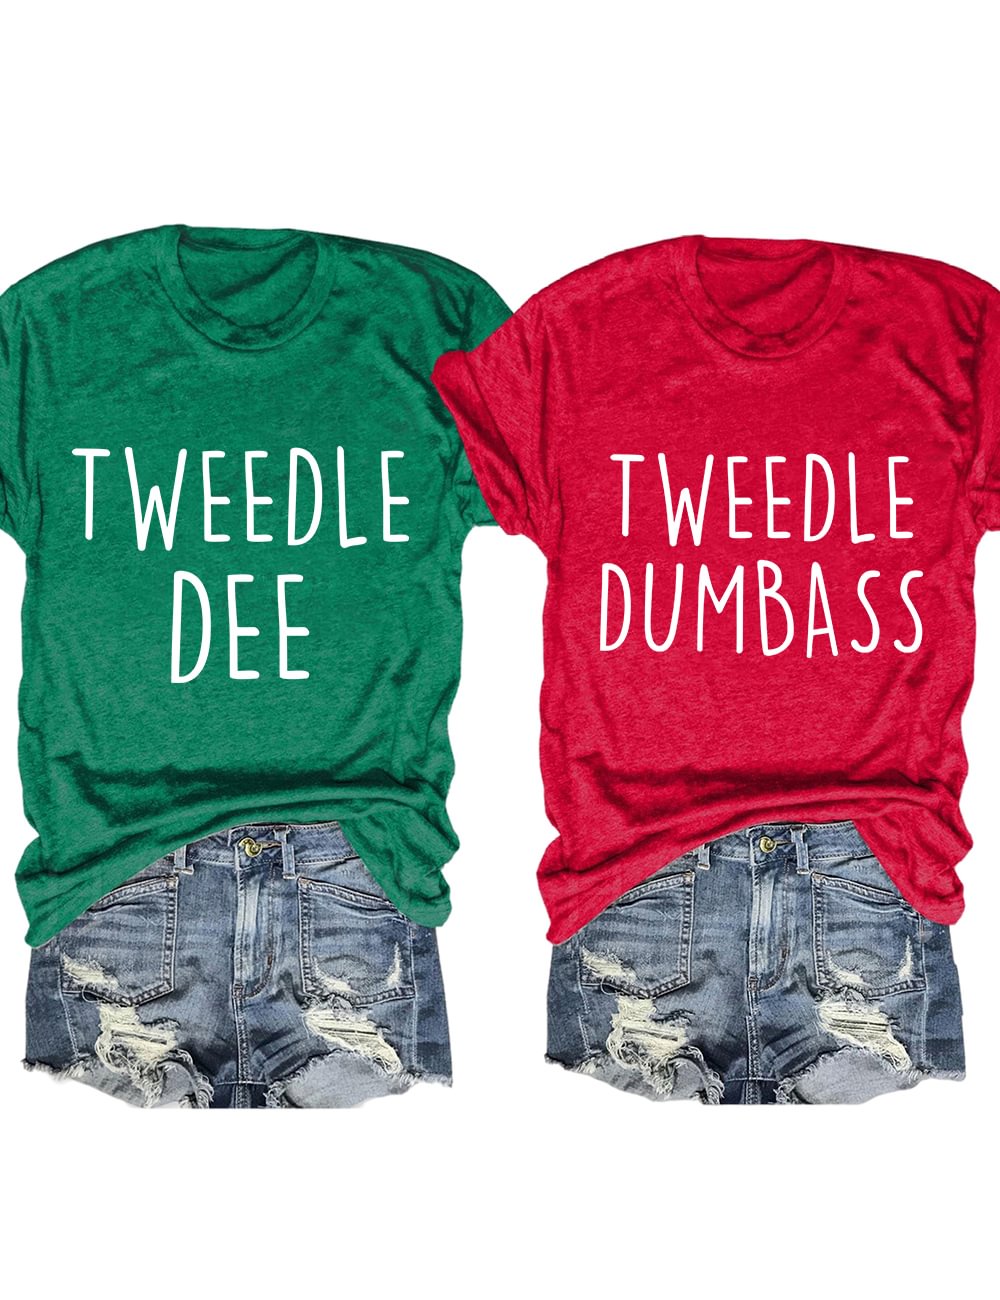 Tweedle Dee/Tweedle Dumbass Matching T-Shirt